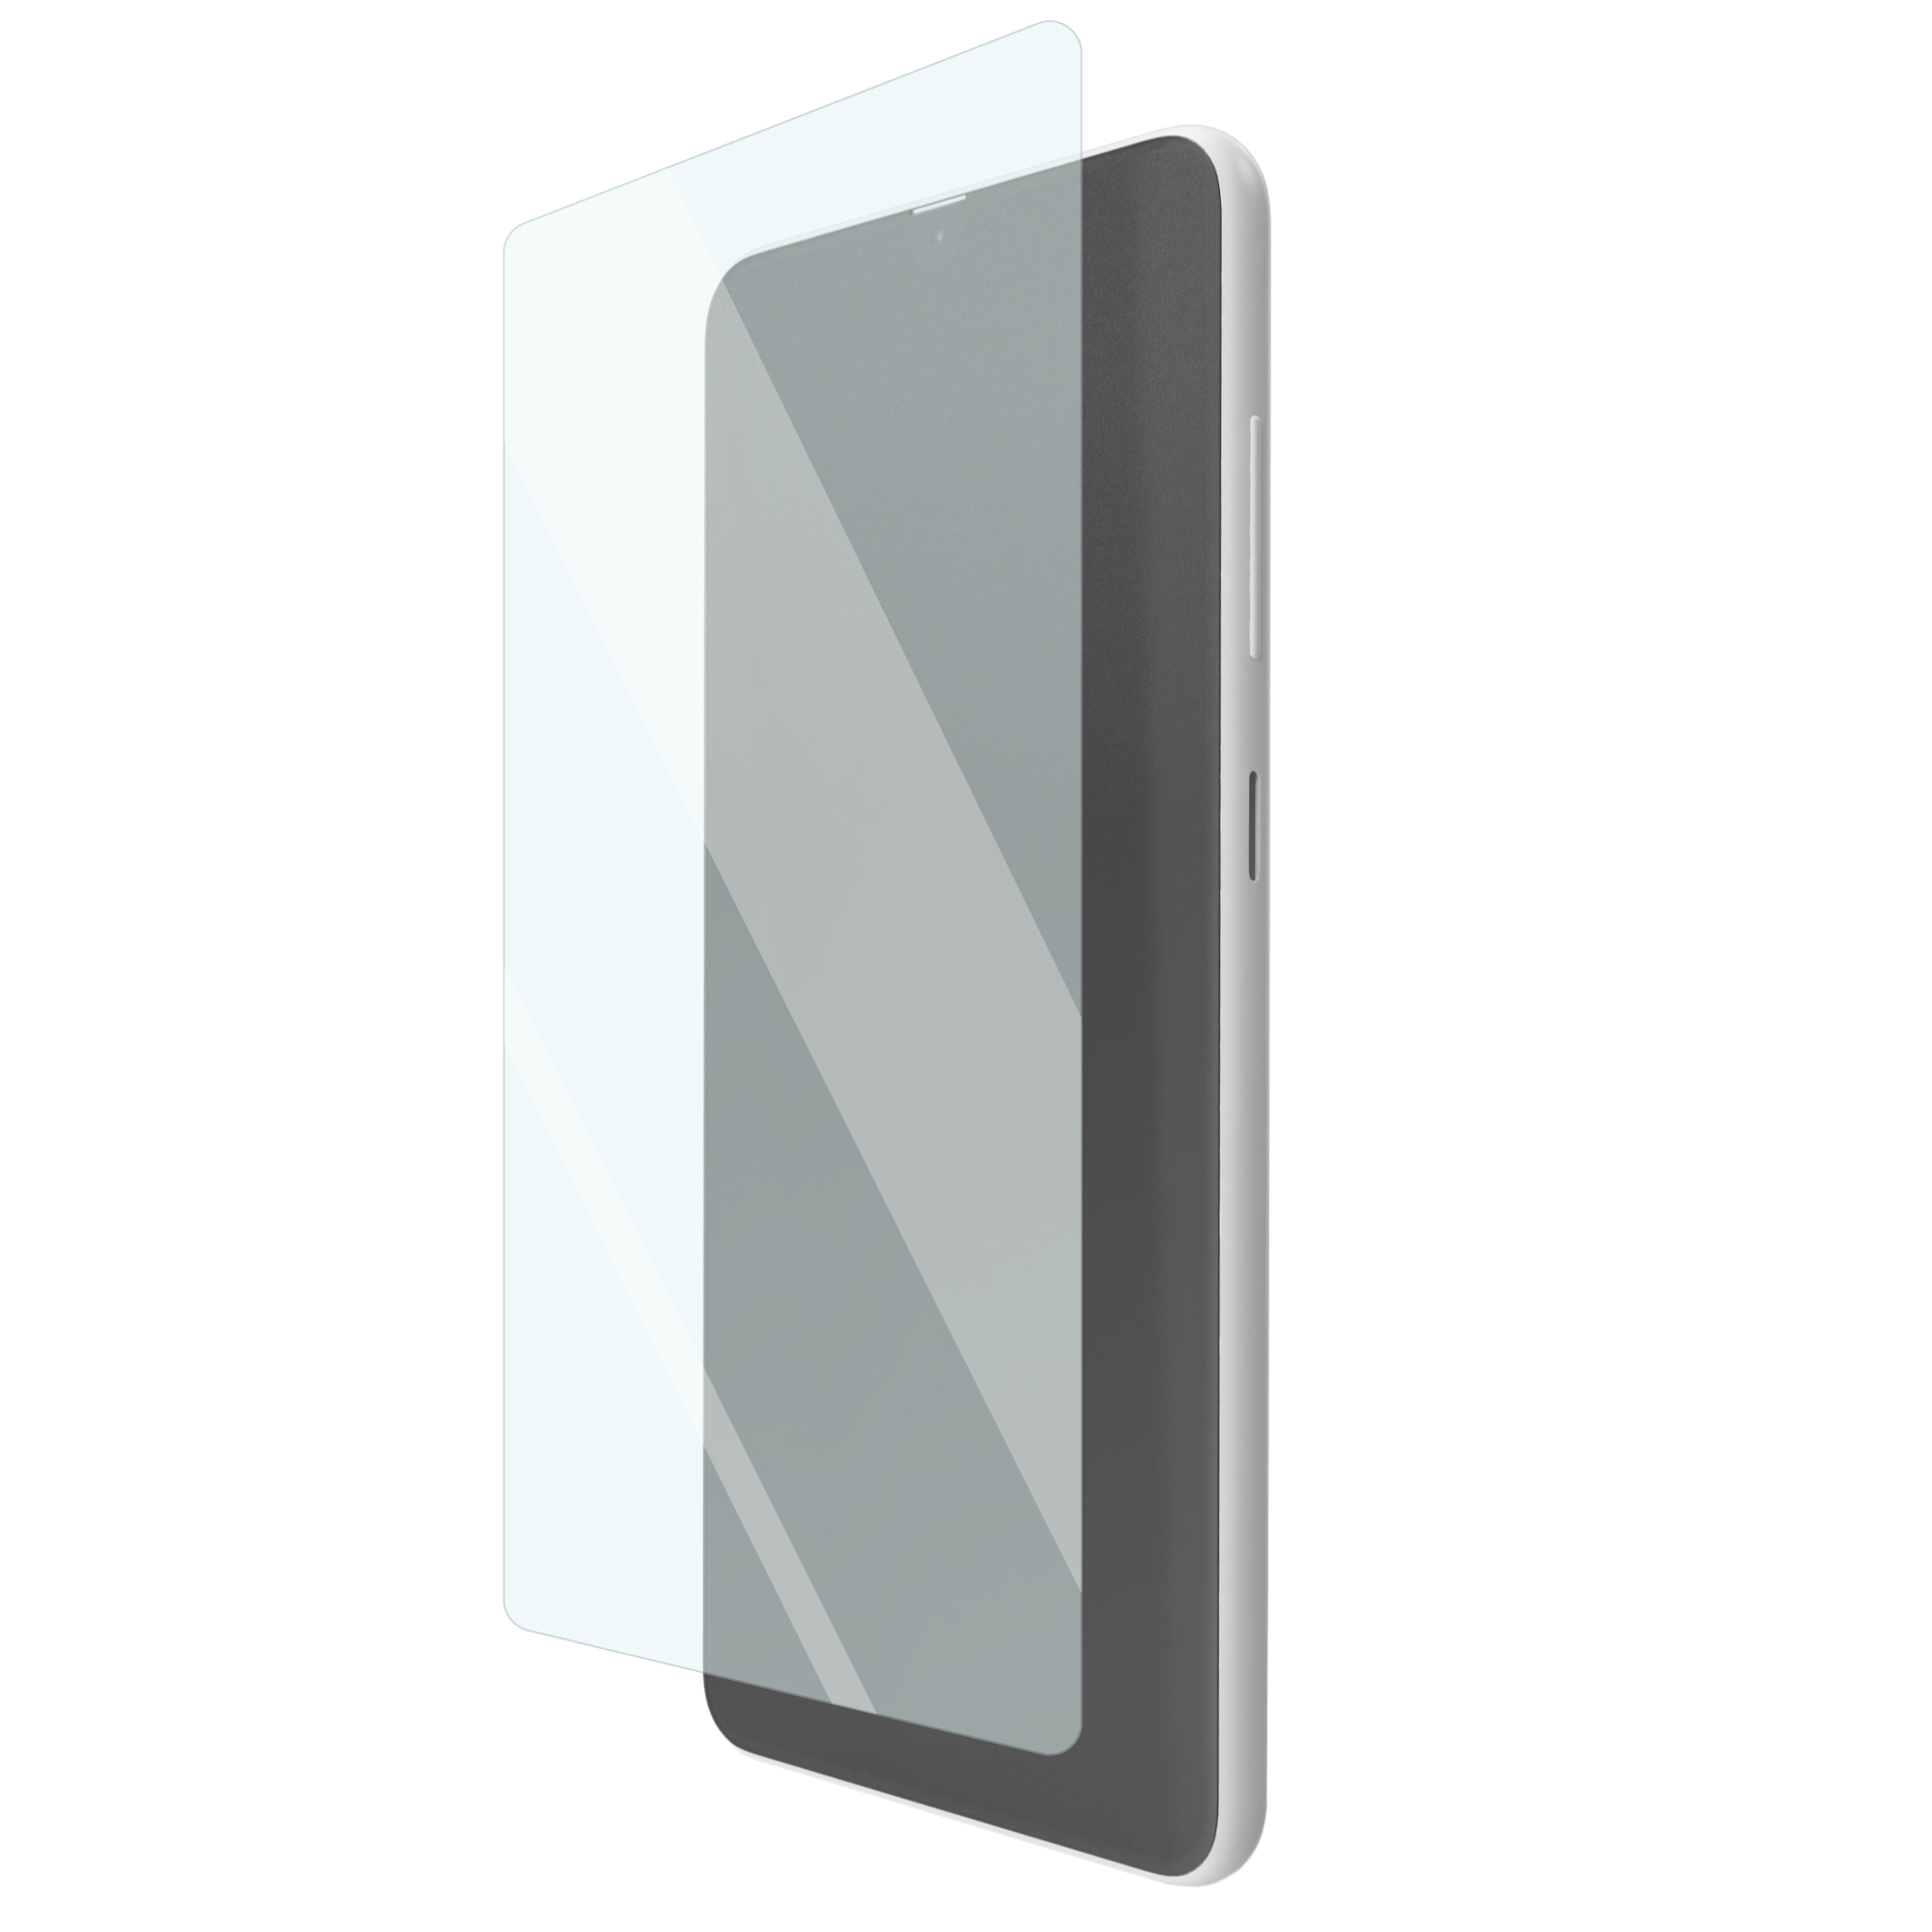 Folie de protectie silicon ShieldUP HiTech Regenerable pentru Xiaomi Mi Mix 2 thumb